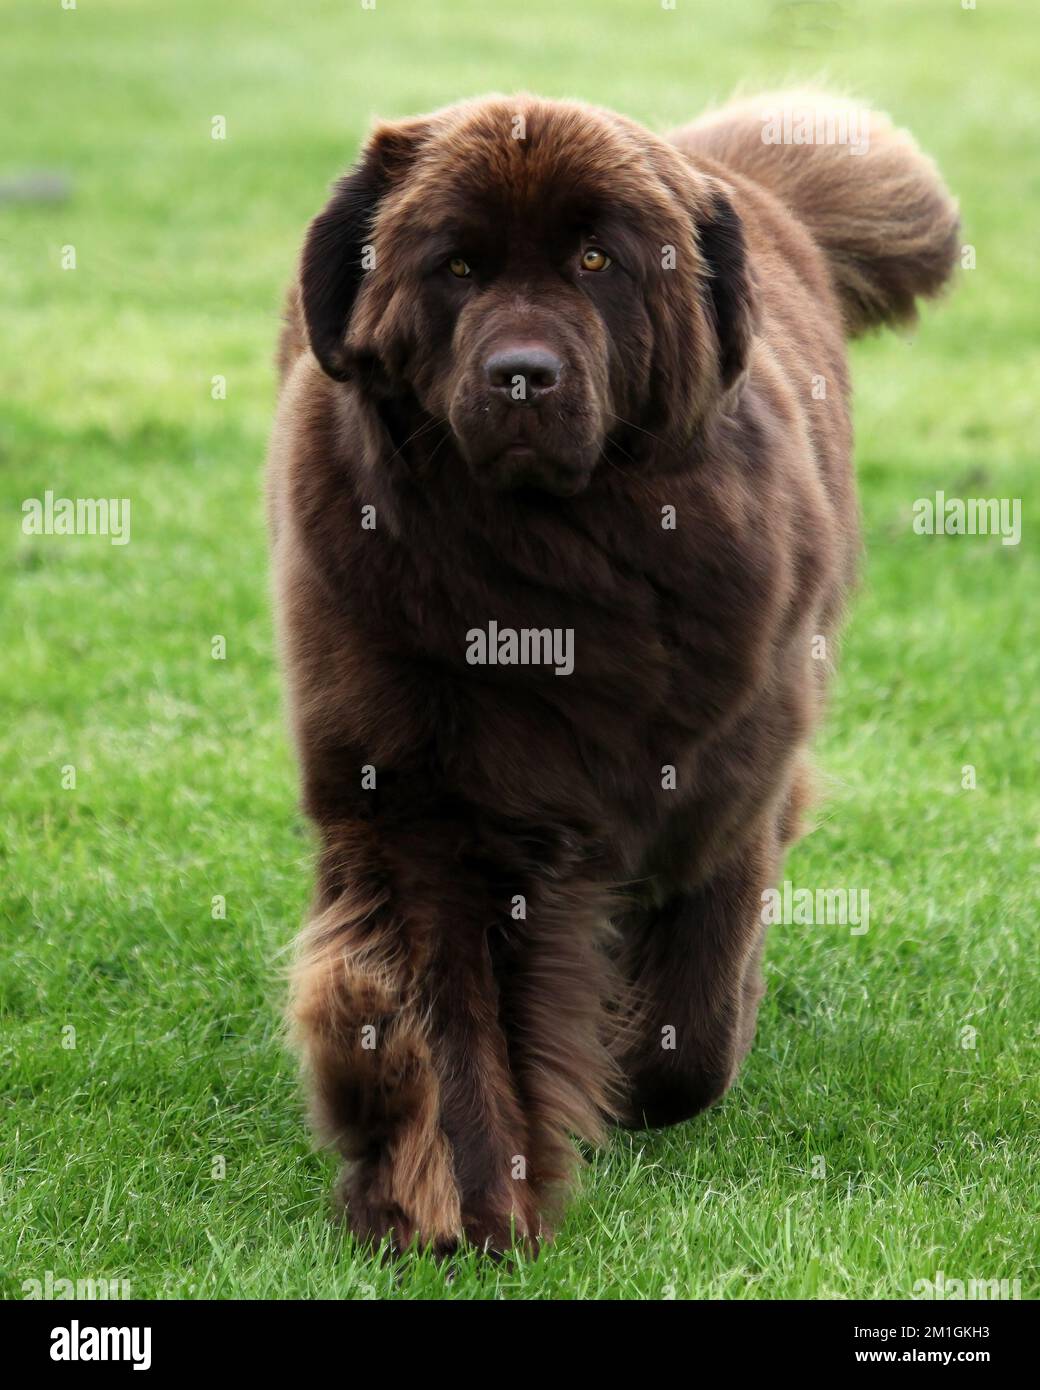 Large,brown Newfoundland dog walking on grass Stock Photo